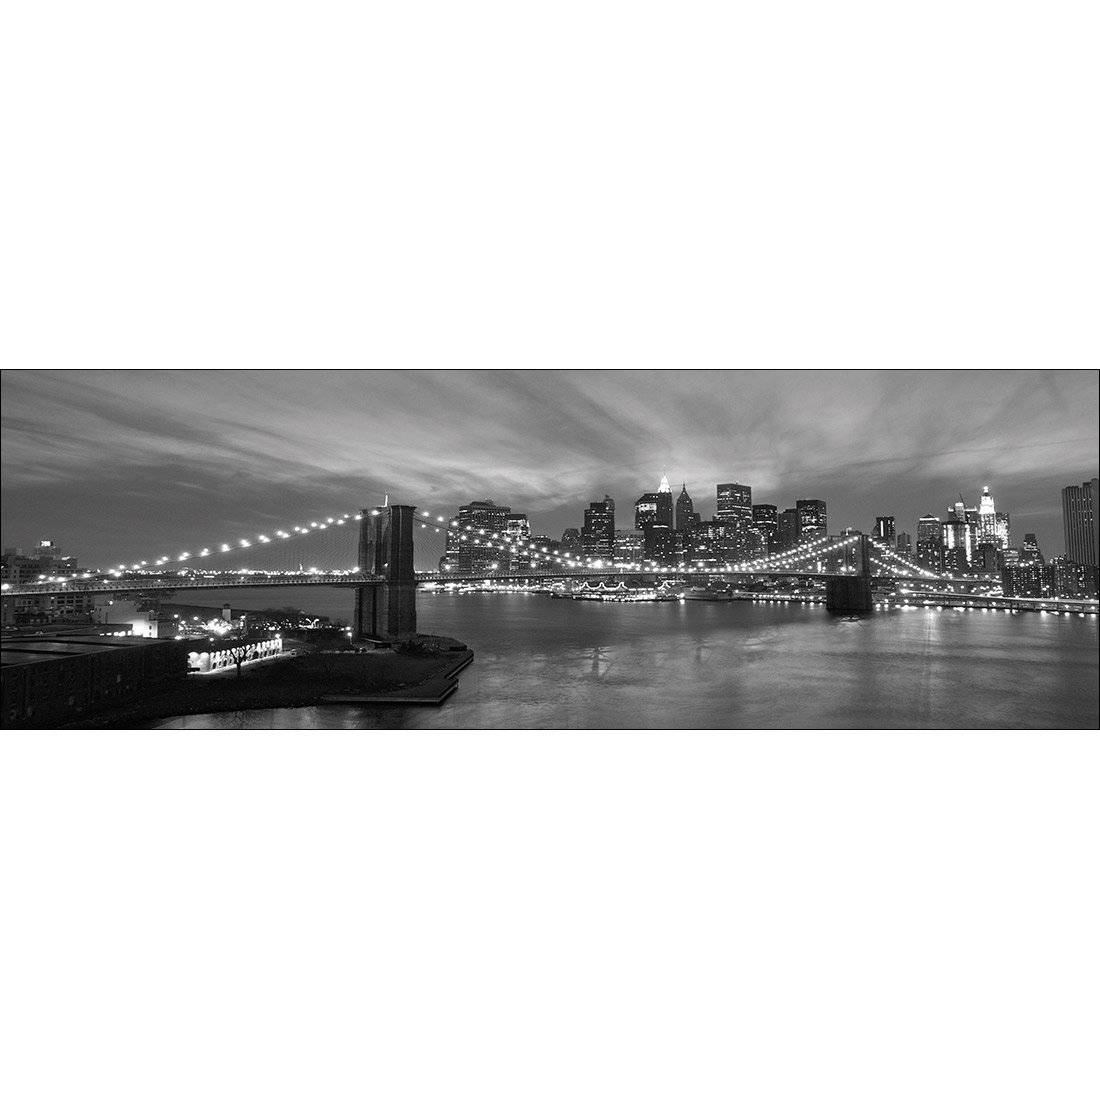 New York Skyline At Night, B&W Canvas Art-Canvas-Wall Art Designs-60x20cm-Canvas - No Frame-Wall Art Designs